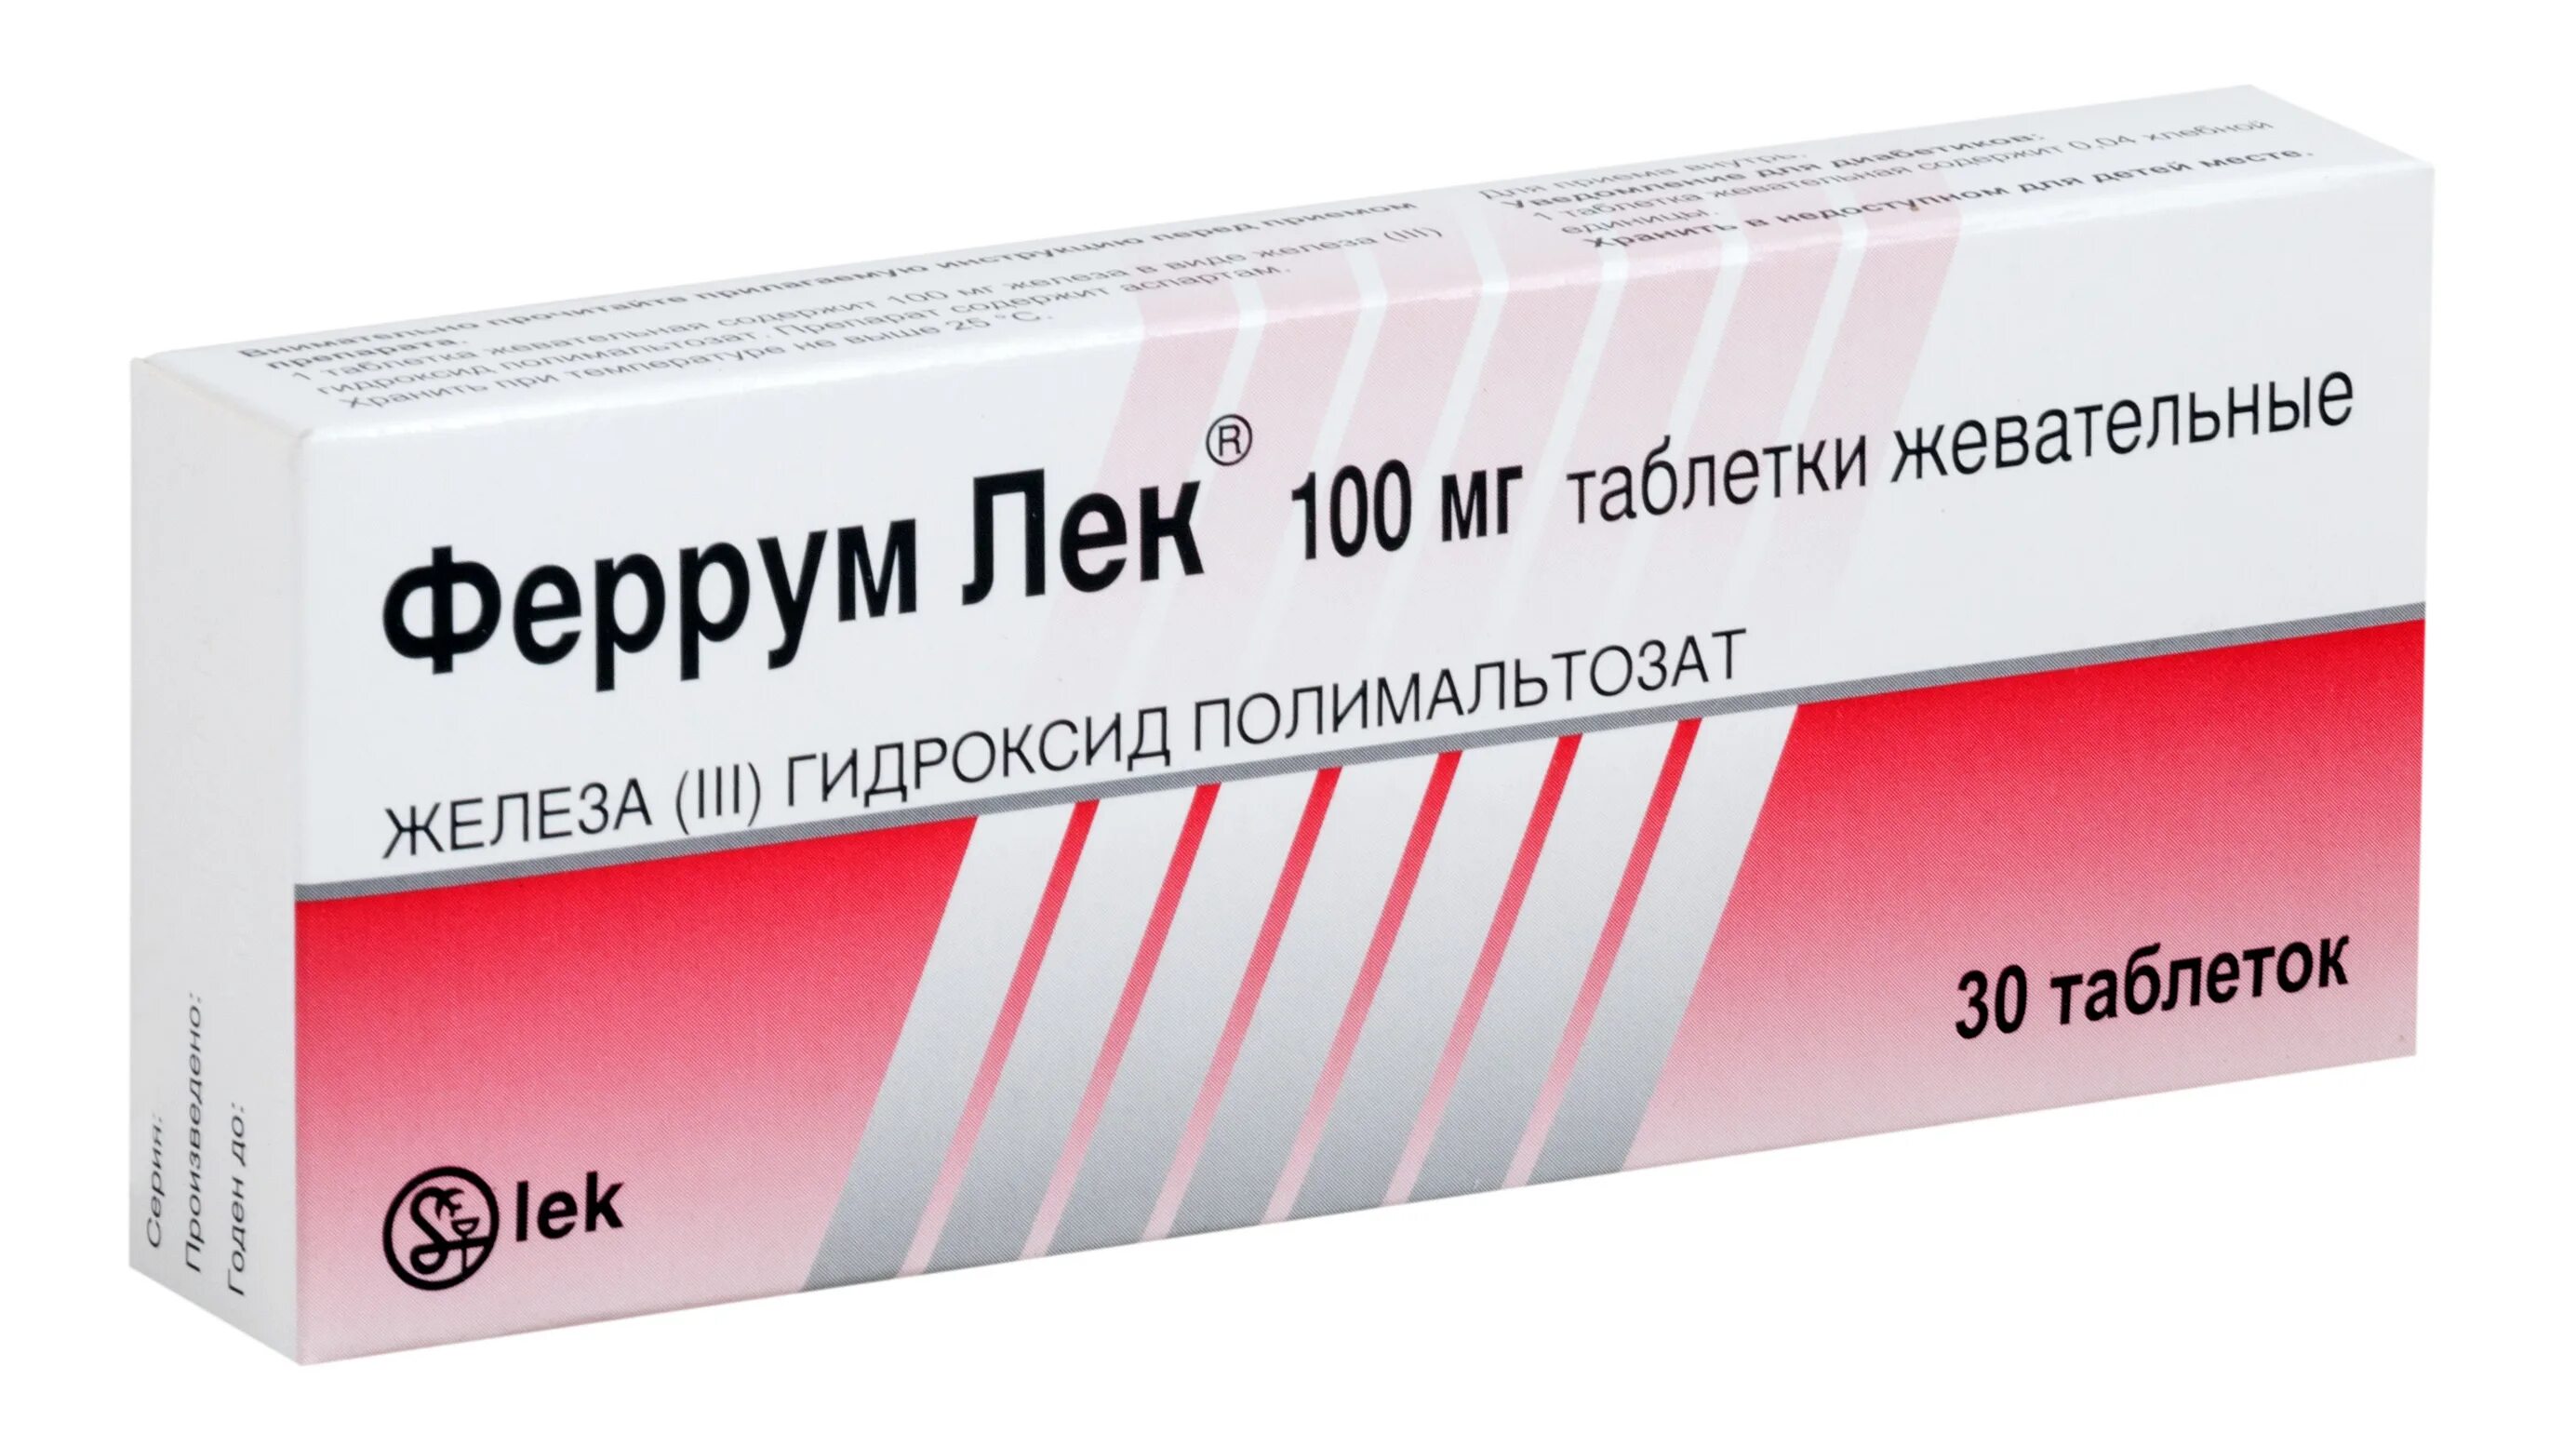 Железа гидроксид декстран. Феррум-лек таблетки 100мг. Железо 3 гидроксид полимальтозат 100 мг таблетки. Ферум-лек таблетки 100 мг. Железа [III] гидроксид полимальтозат таблетки жевательные, 100 мг.